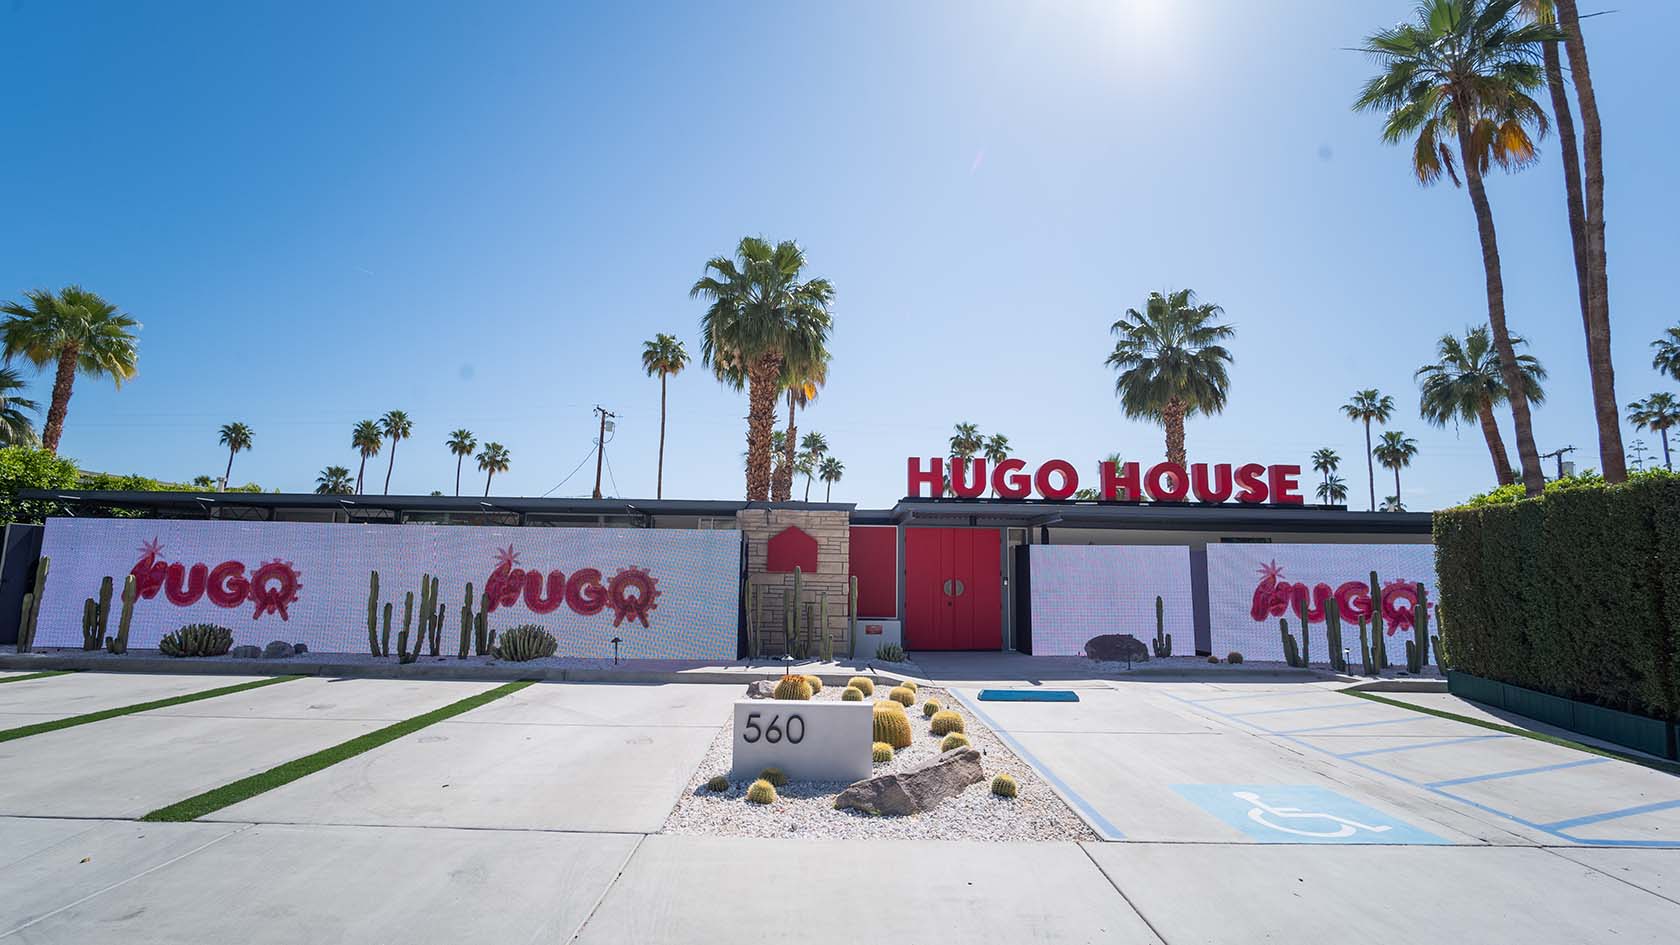 HUGO House in Palm Springs